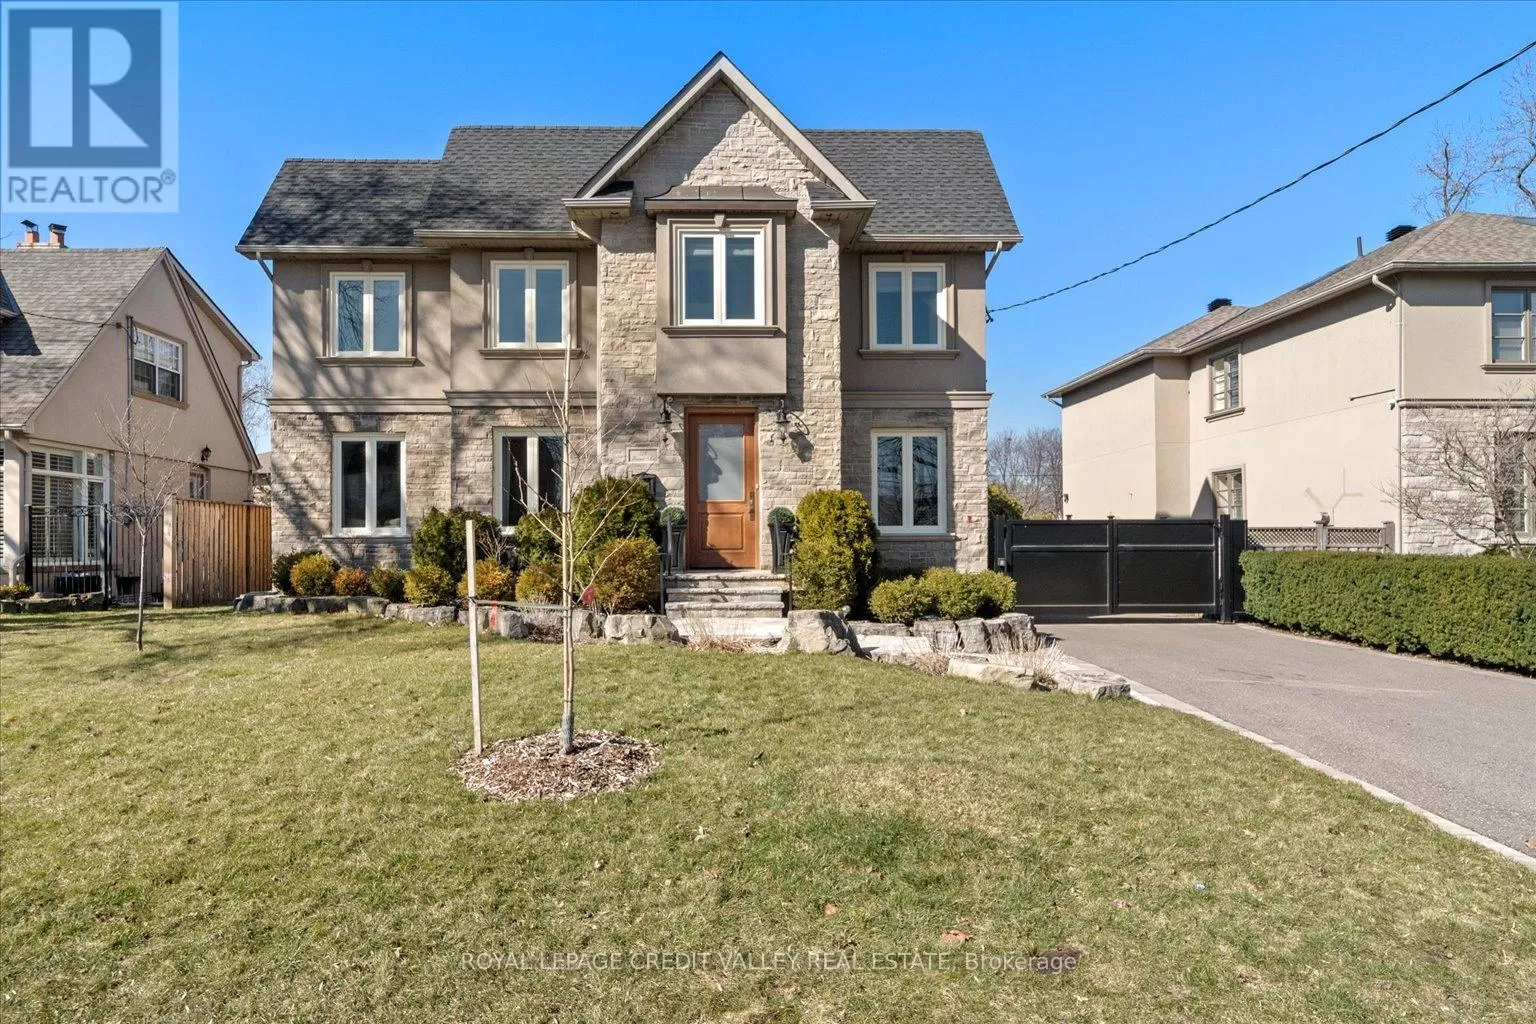 House for rent: 128 Laurel Avenue, Toronto, Ontario M9B 4T6